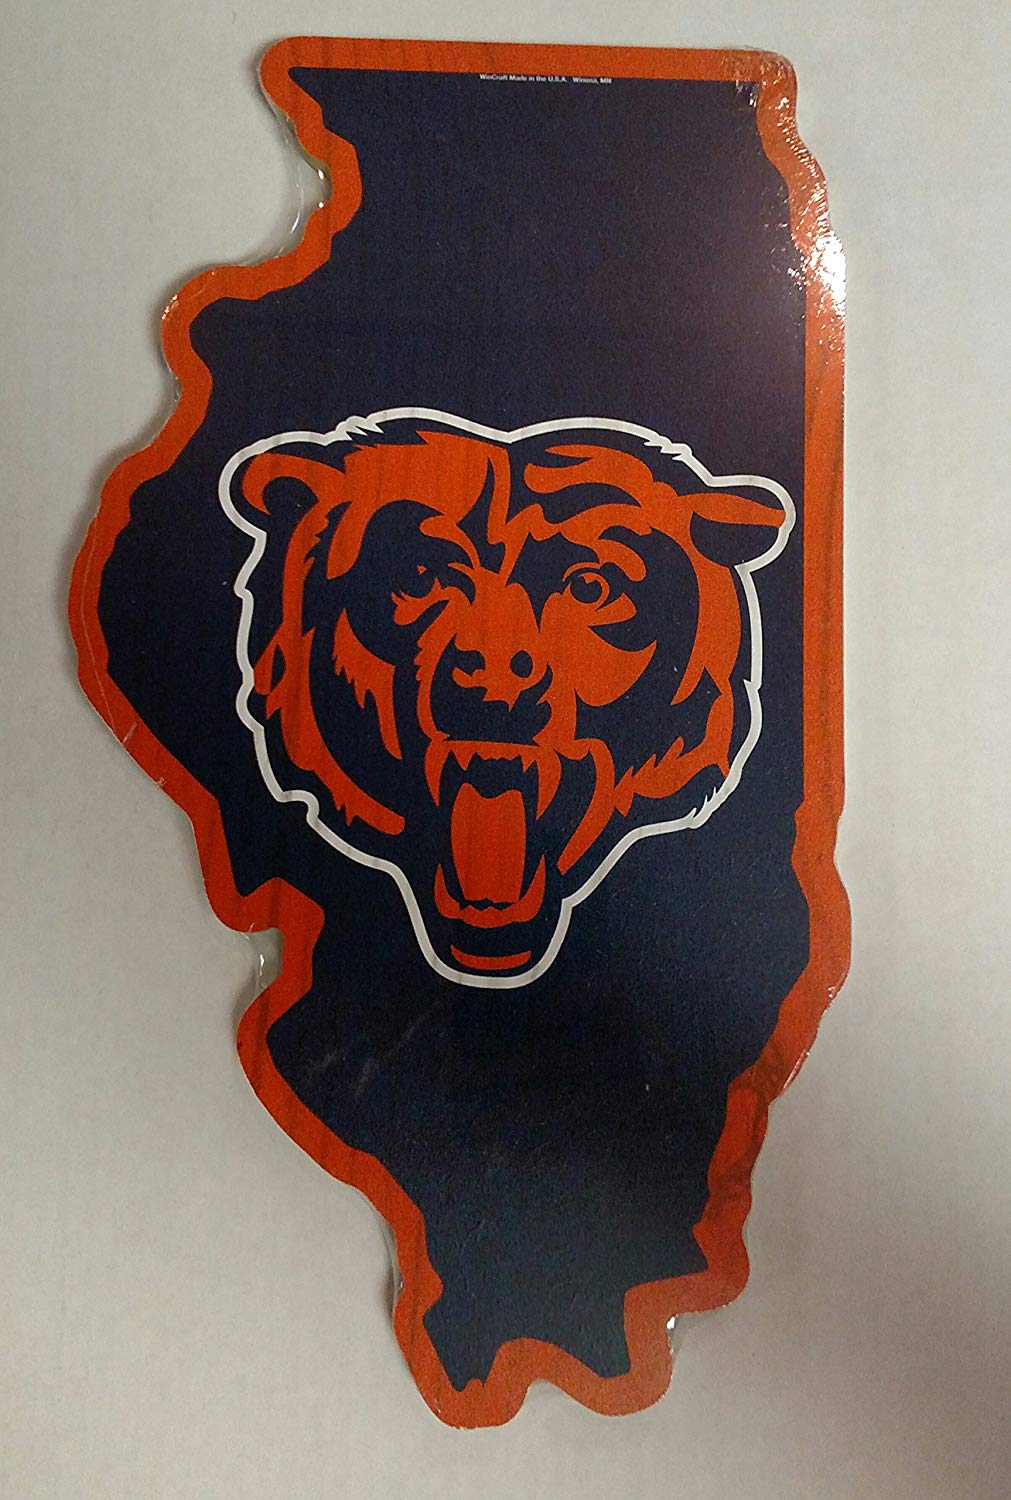 Chicago Bears Ruler With Floating NFL Logo - Unusual, Vintage